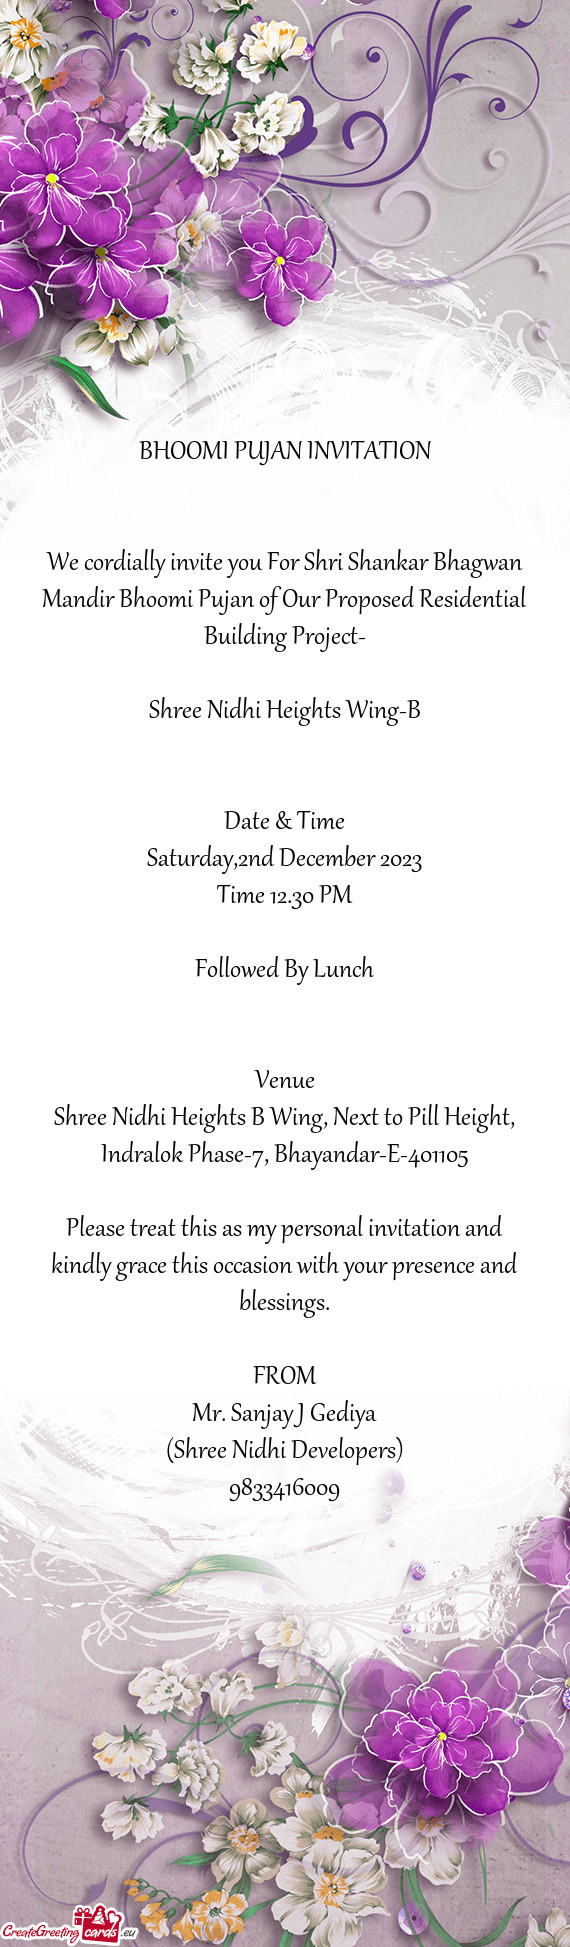 Shree Nidhi Heights Wing-B